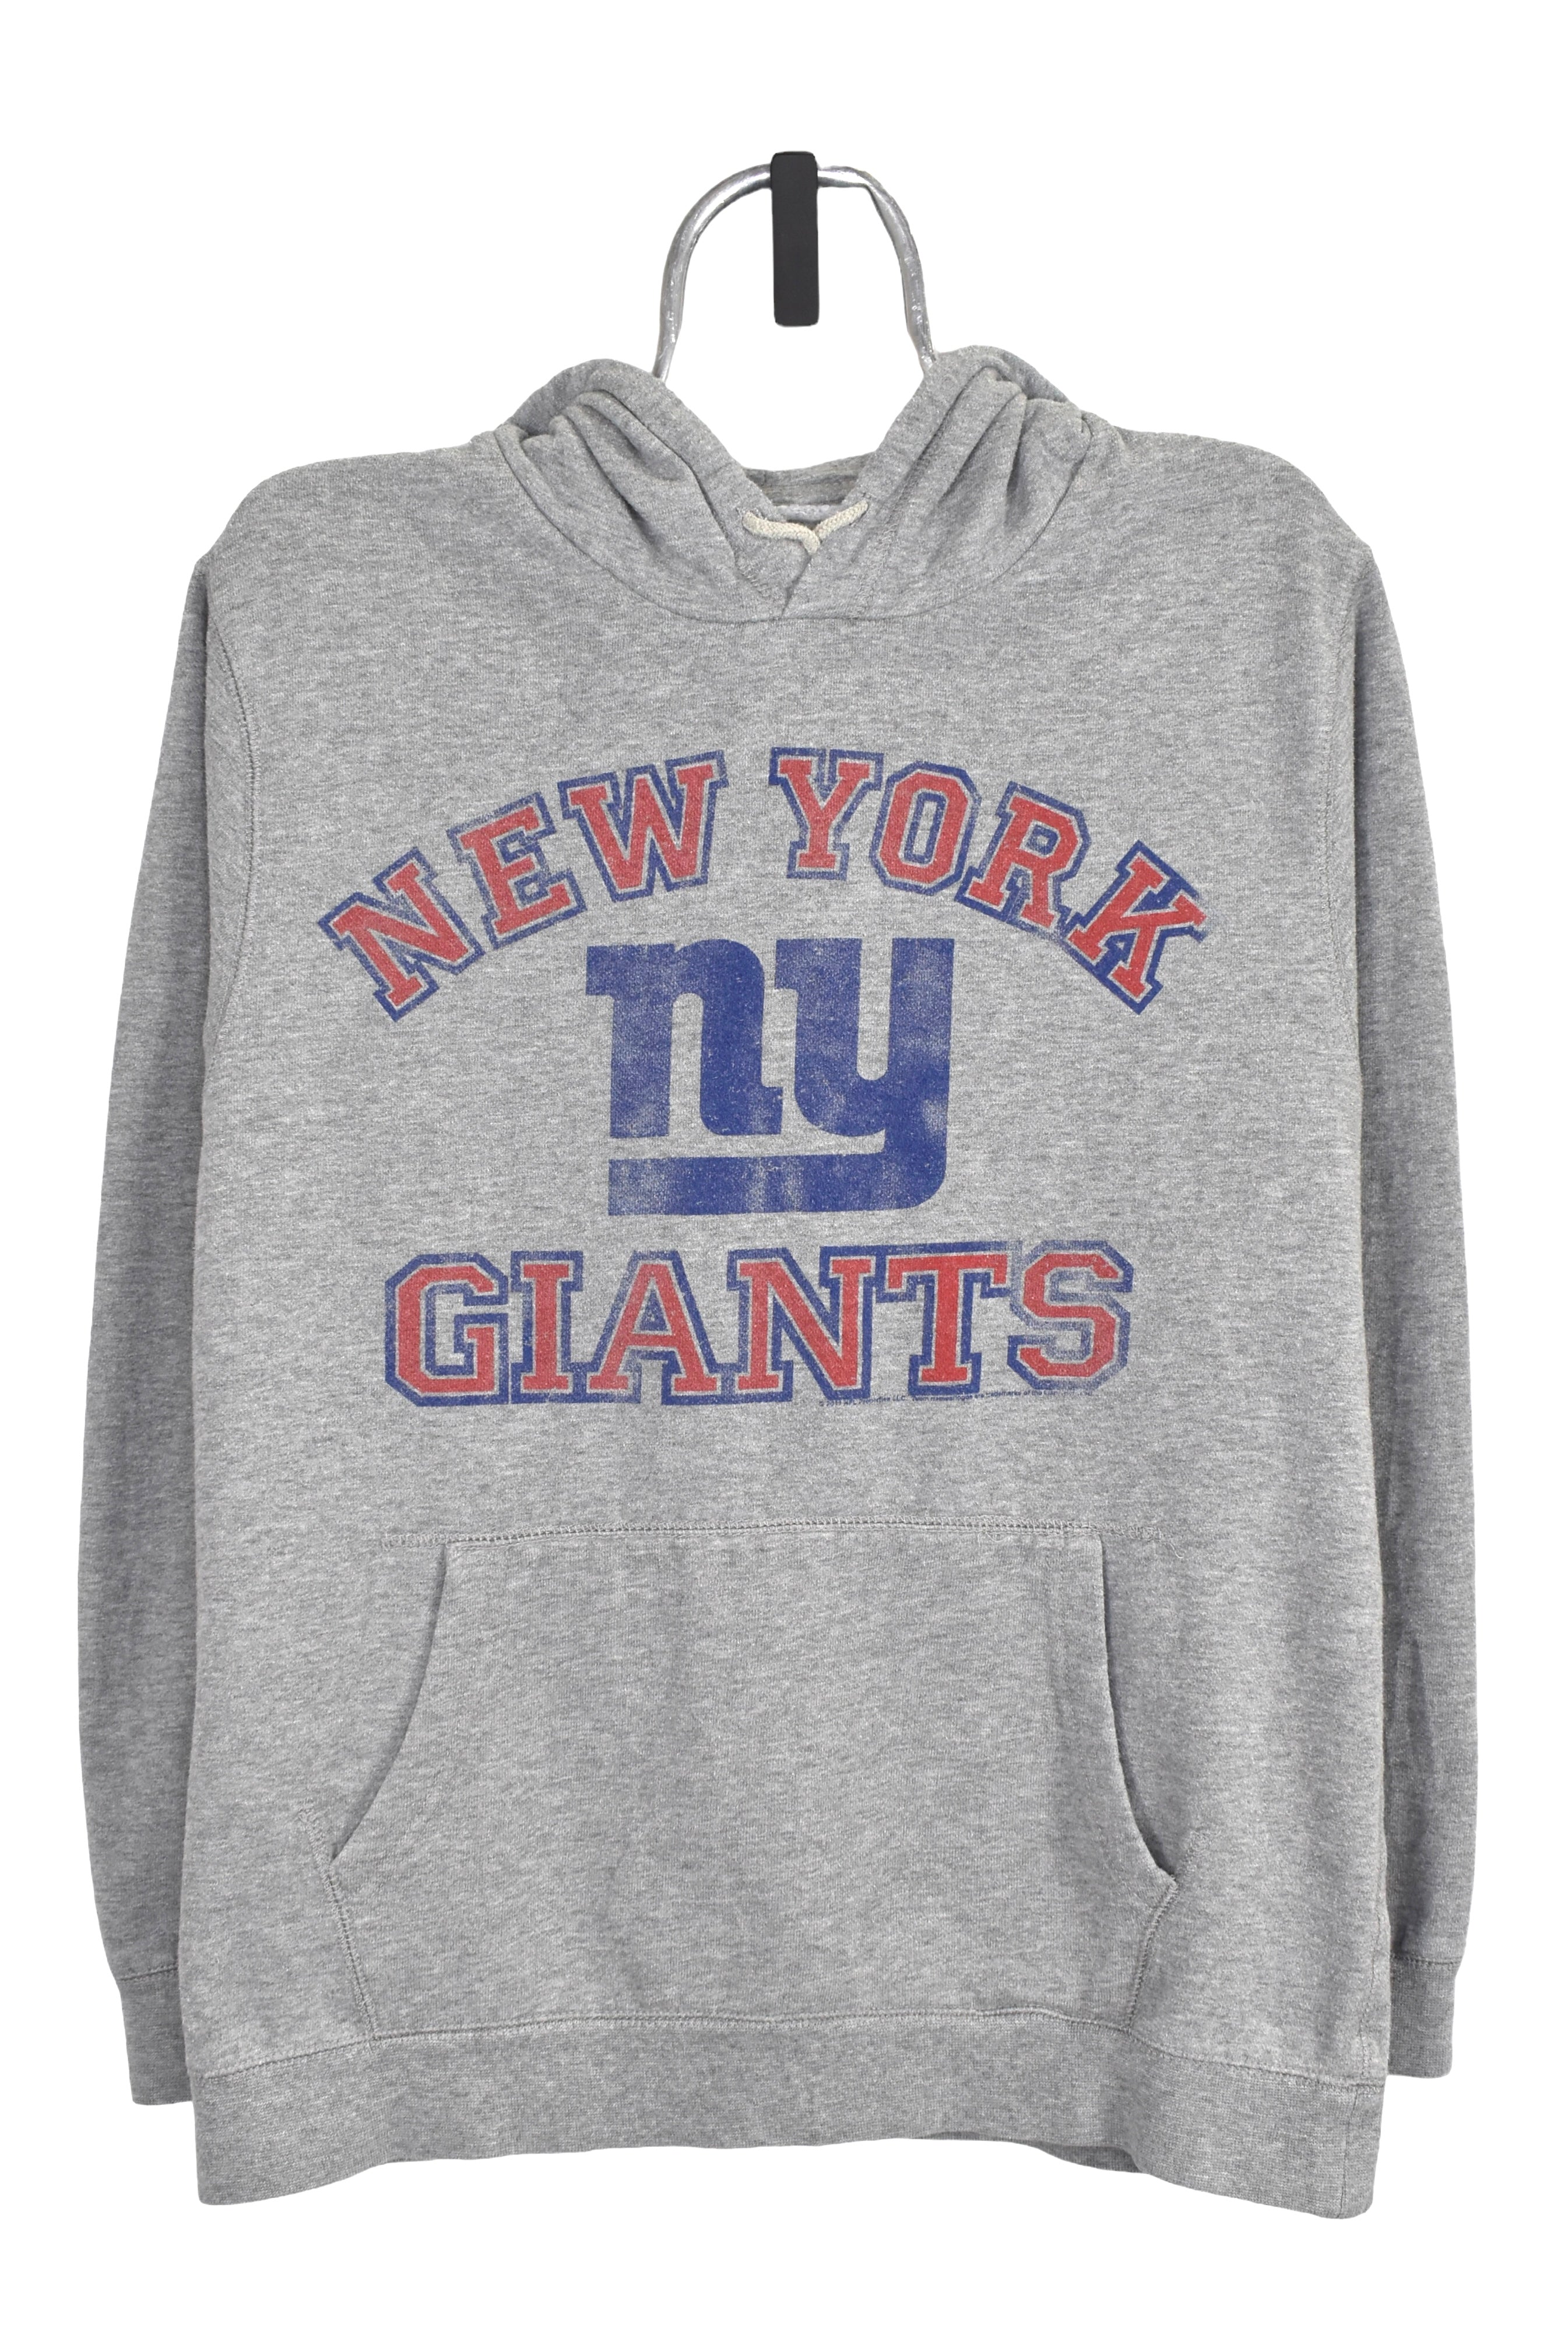 Modern New York Giants hoodie (M), grey NFL graphic sweatshirt